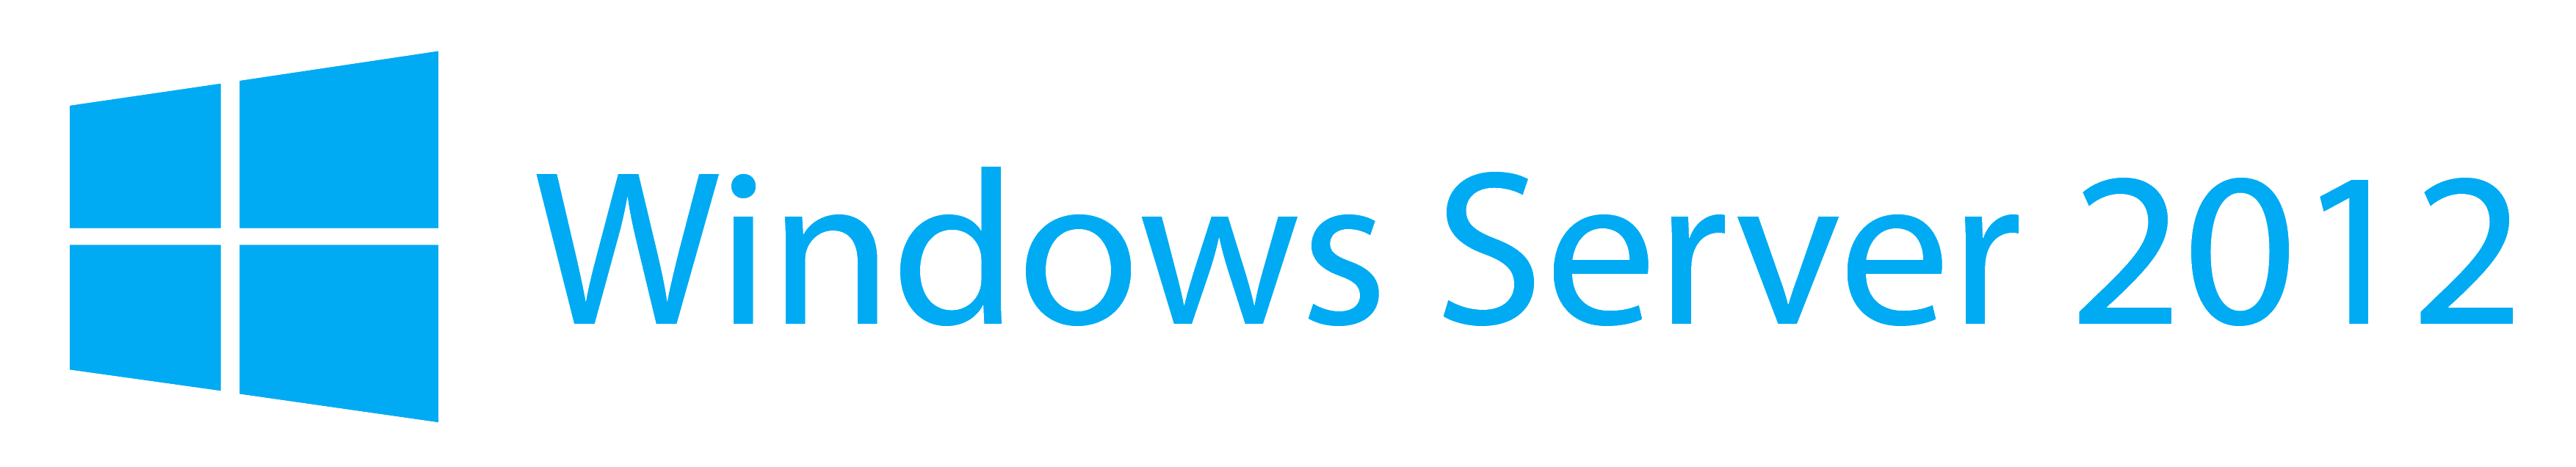 Windows server 2012 download iso with key 32 bit torrent